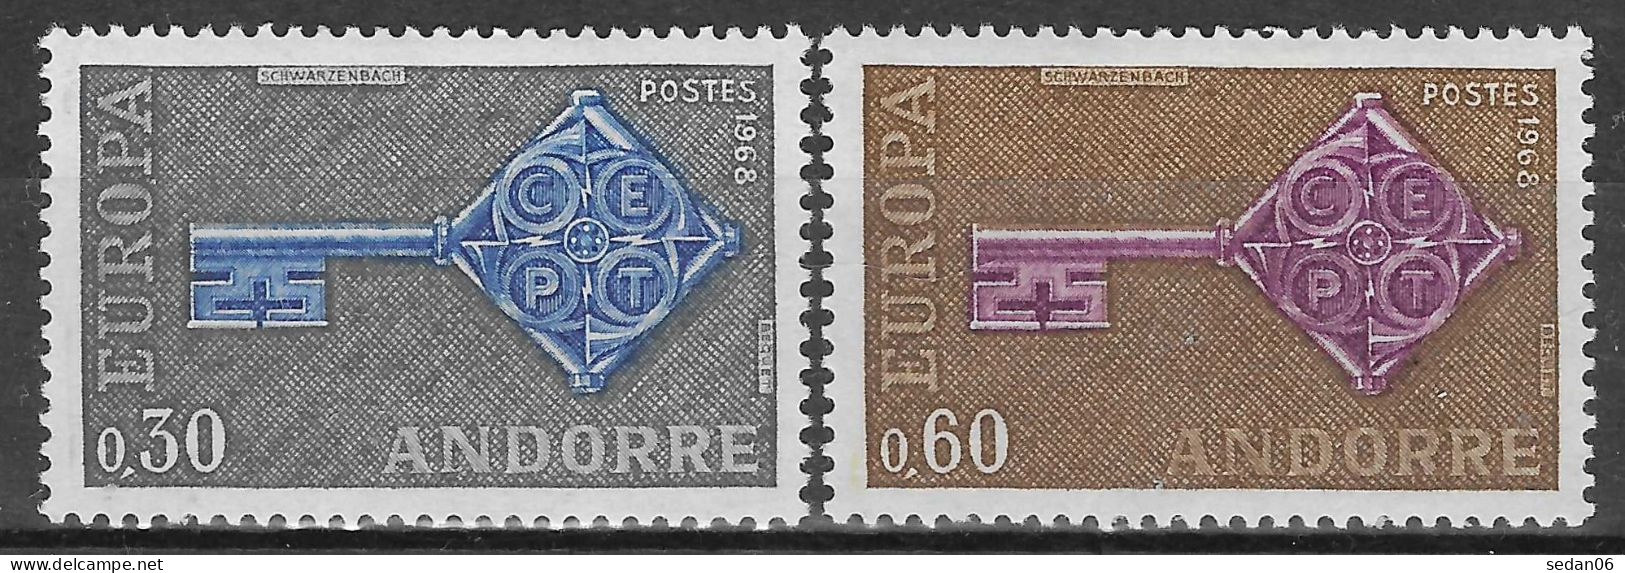 ANDORRE FRANCAIS N°188/189* (europa 1968) - COTE 35.00 € - 1968